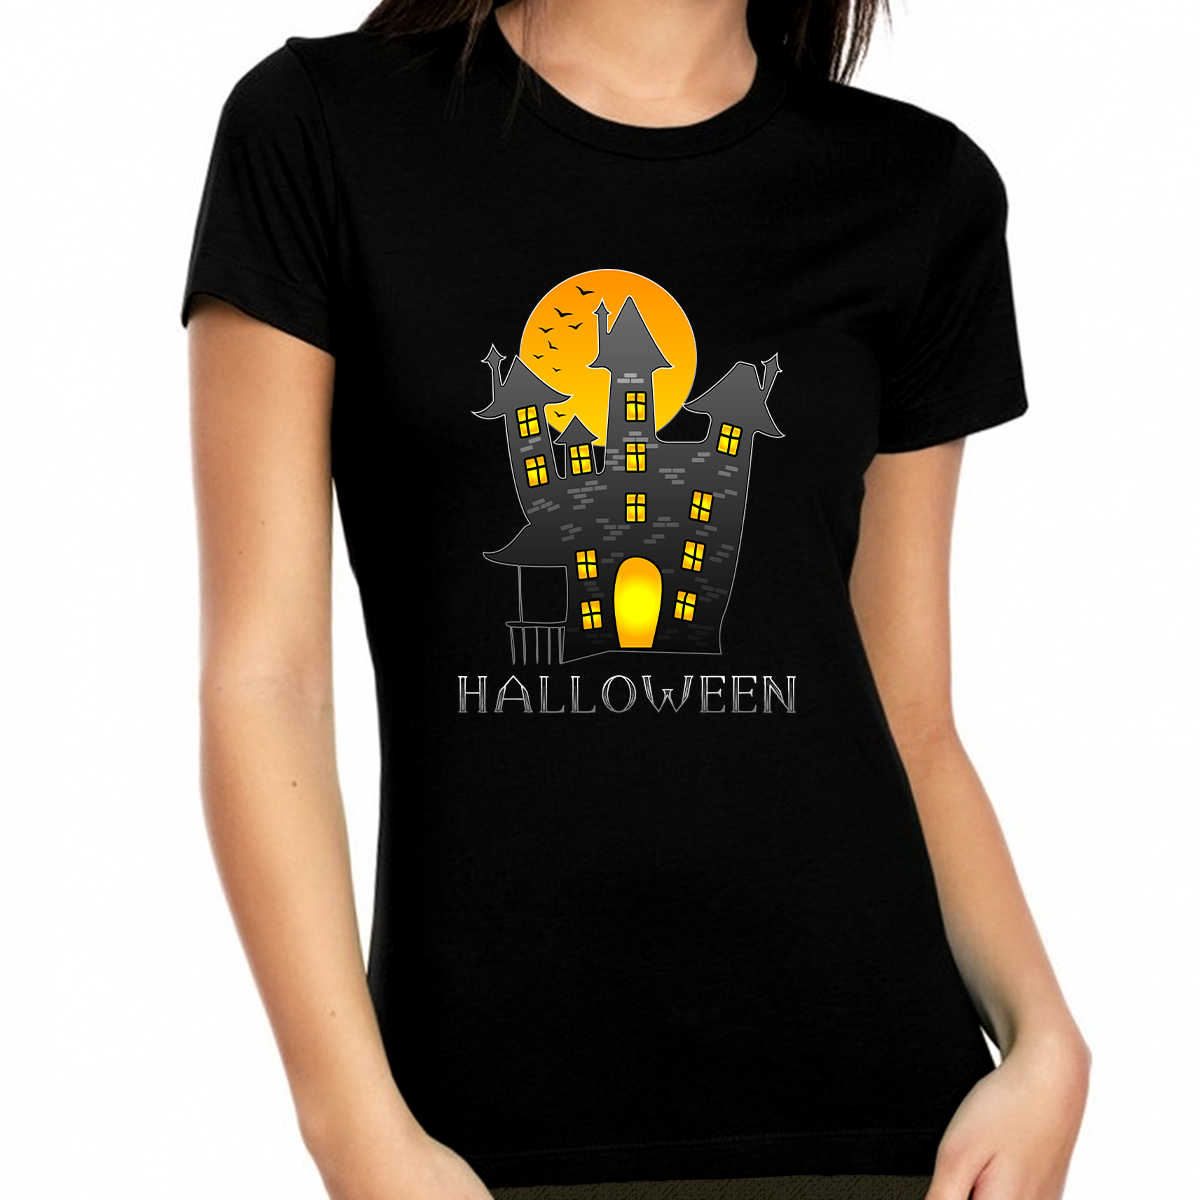 Halloween Shirts for Women Haunted Mansion Shirt Halloween Clothes for Women Tops Womens Halloween Shirts